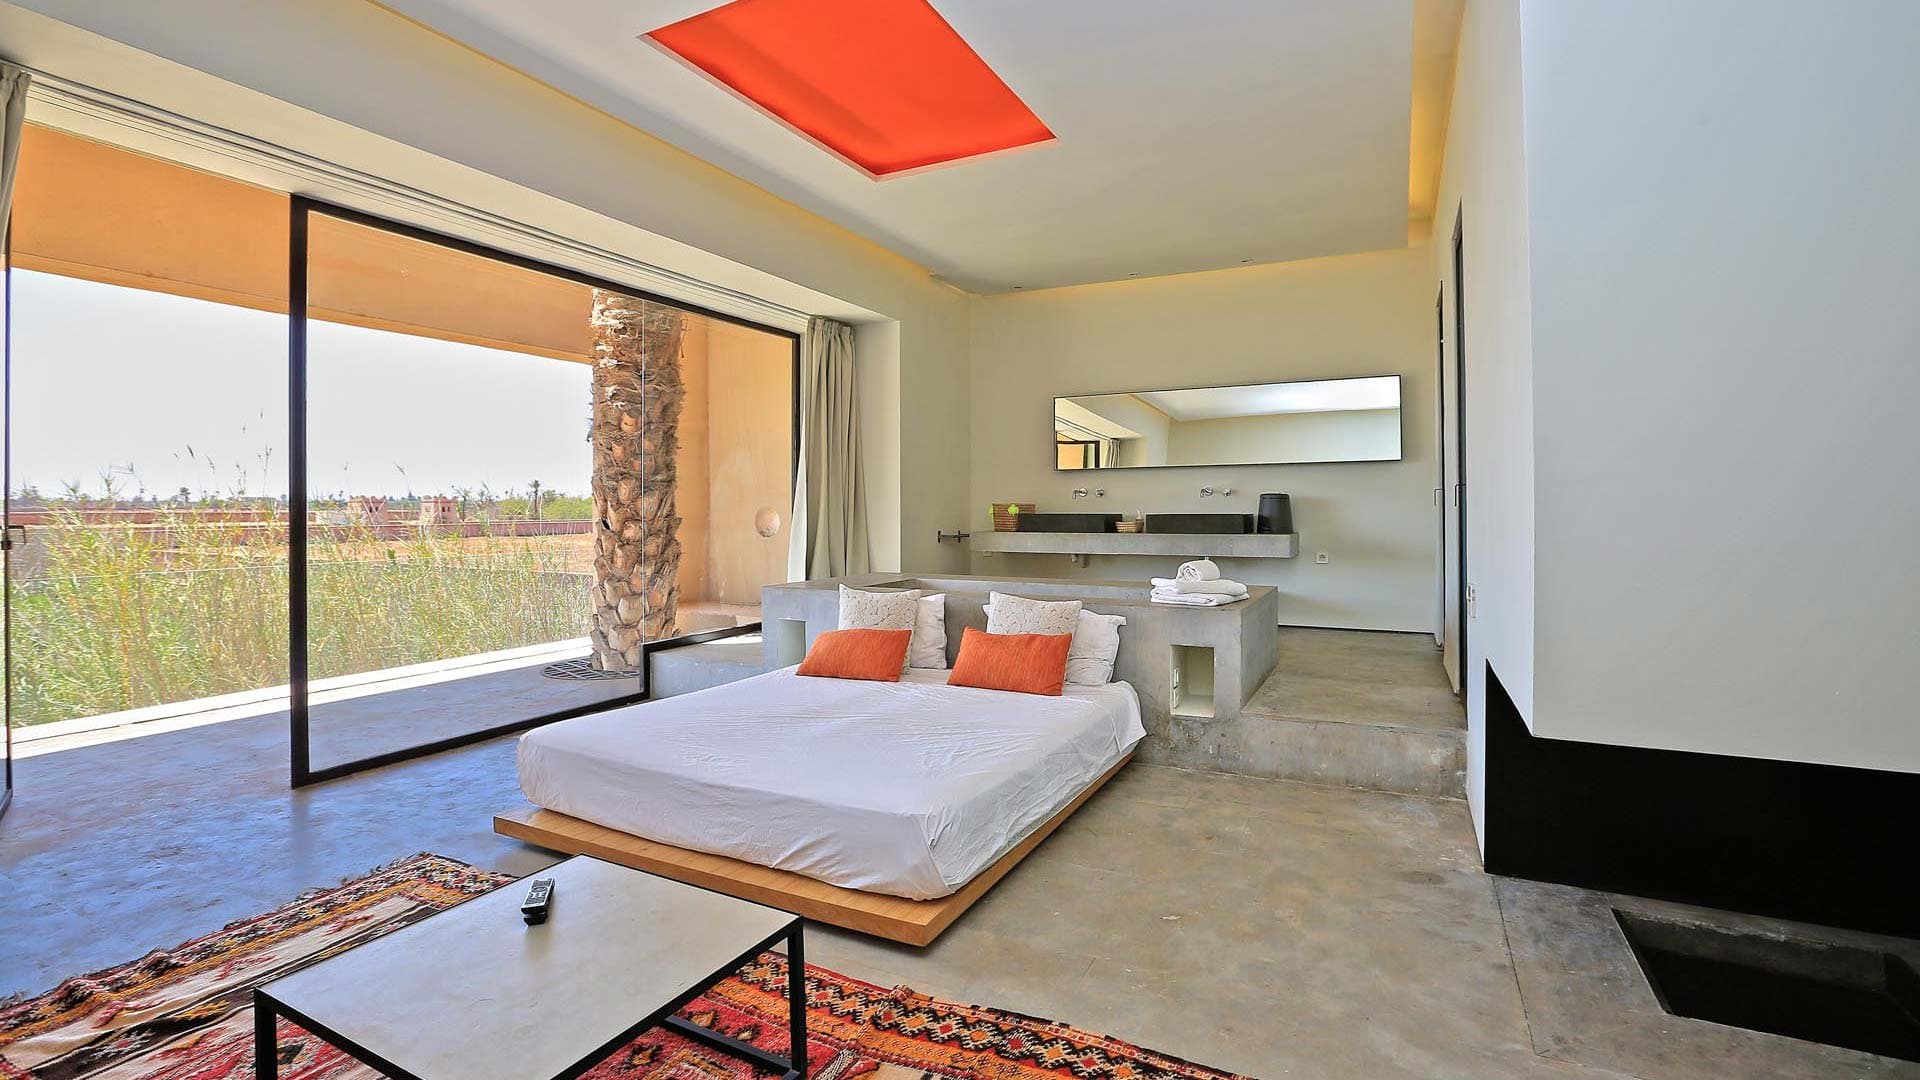 6 Bedroom Villa For Sale Marrakech Lp08713 2a21dd4585058800.jpg